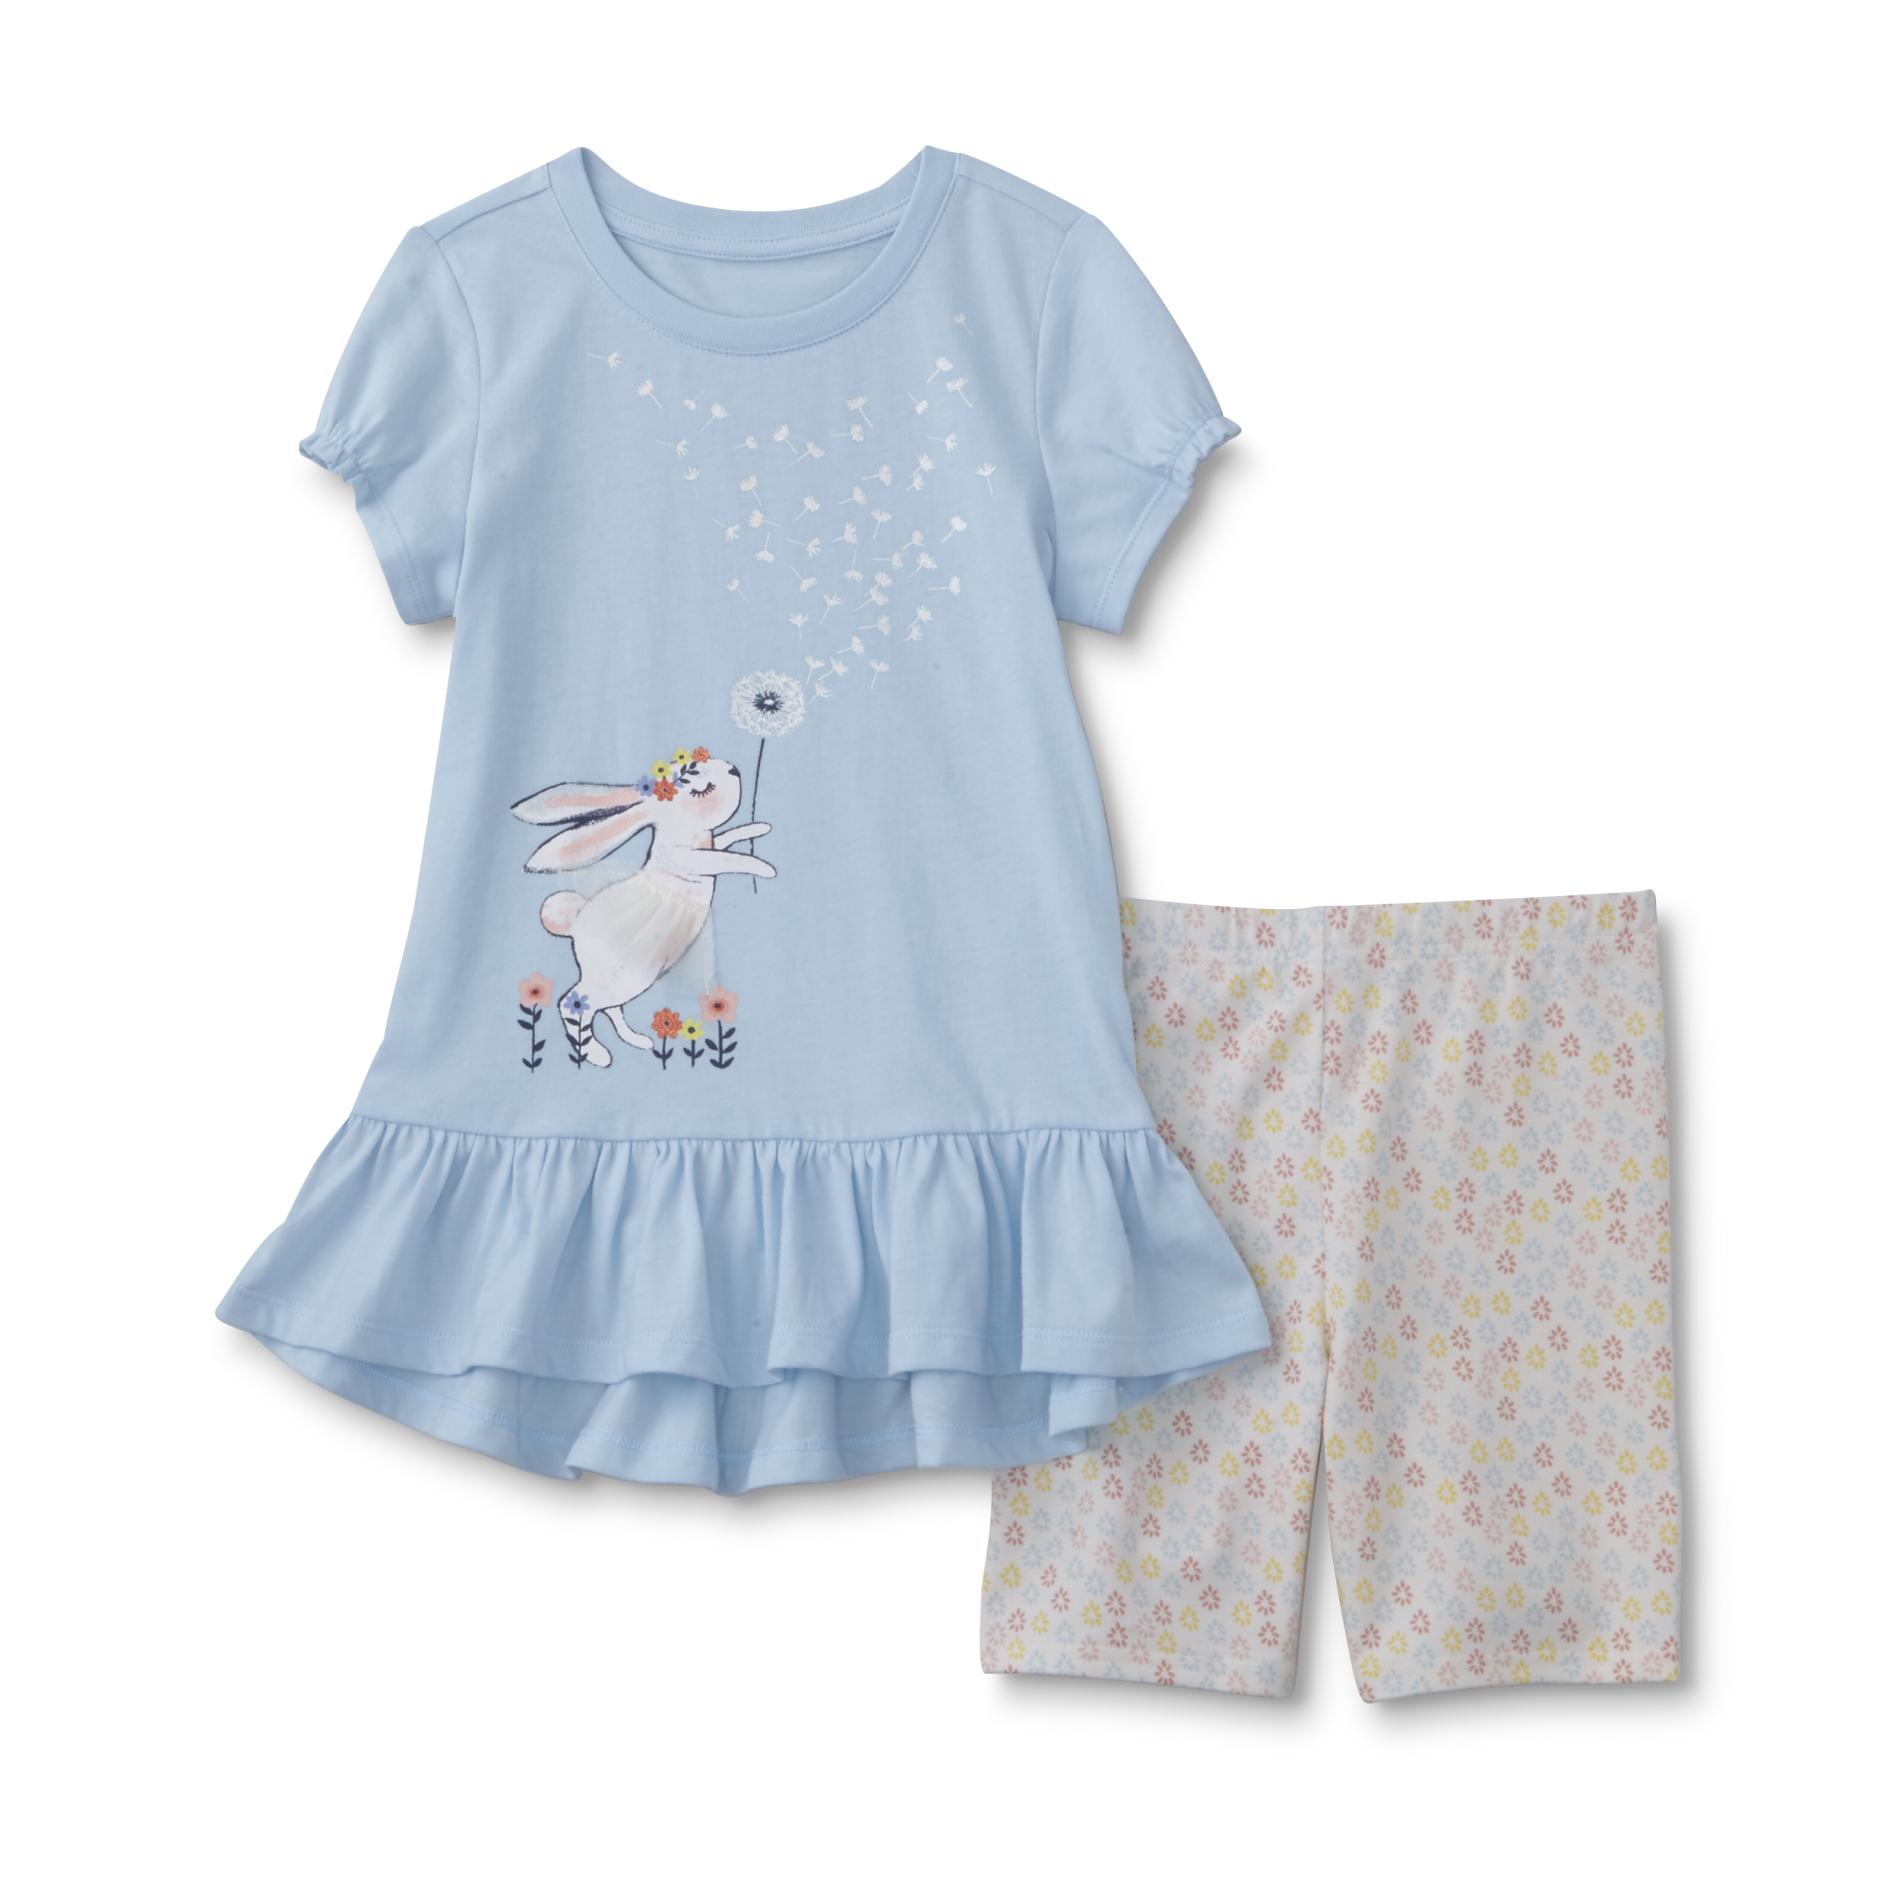 Toughskins Infant & Toddler Girls' T-Shirt & Bike Shorts - Rabbit & Floral